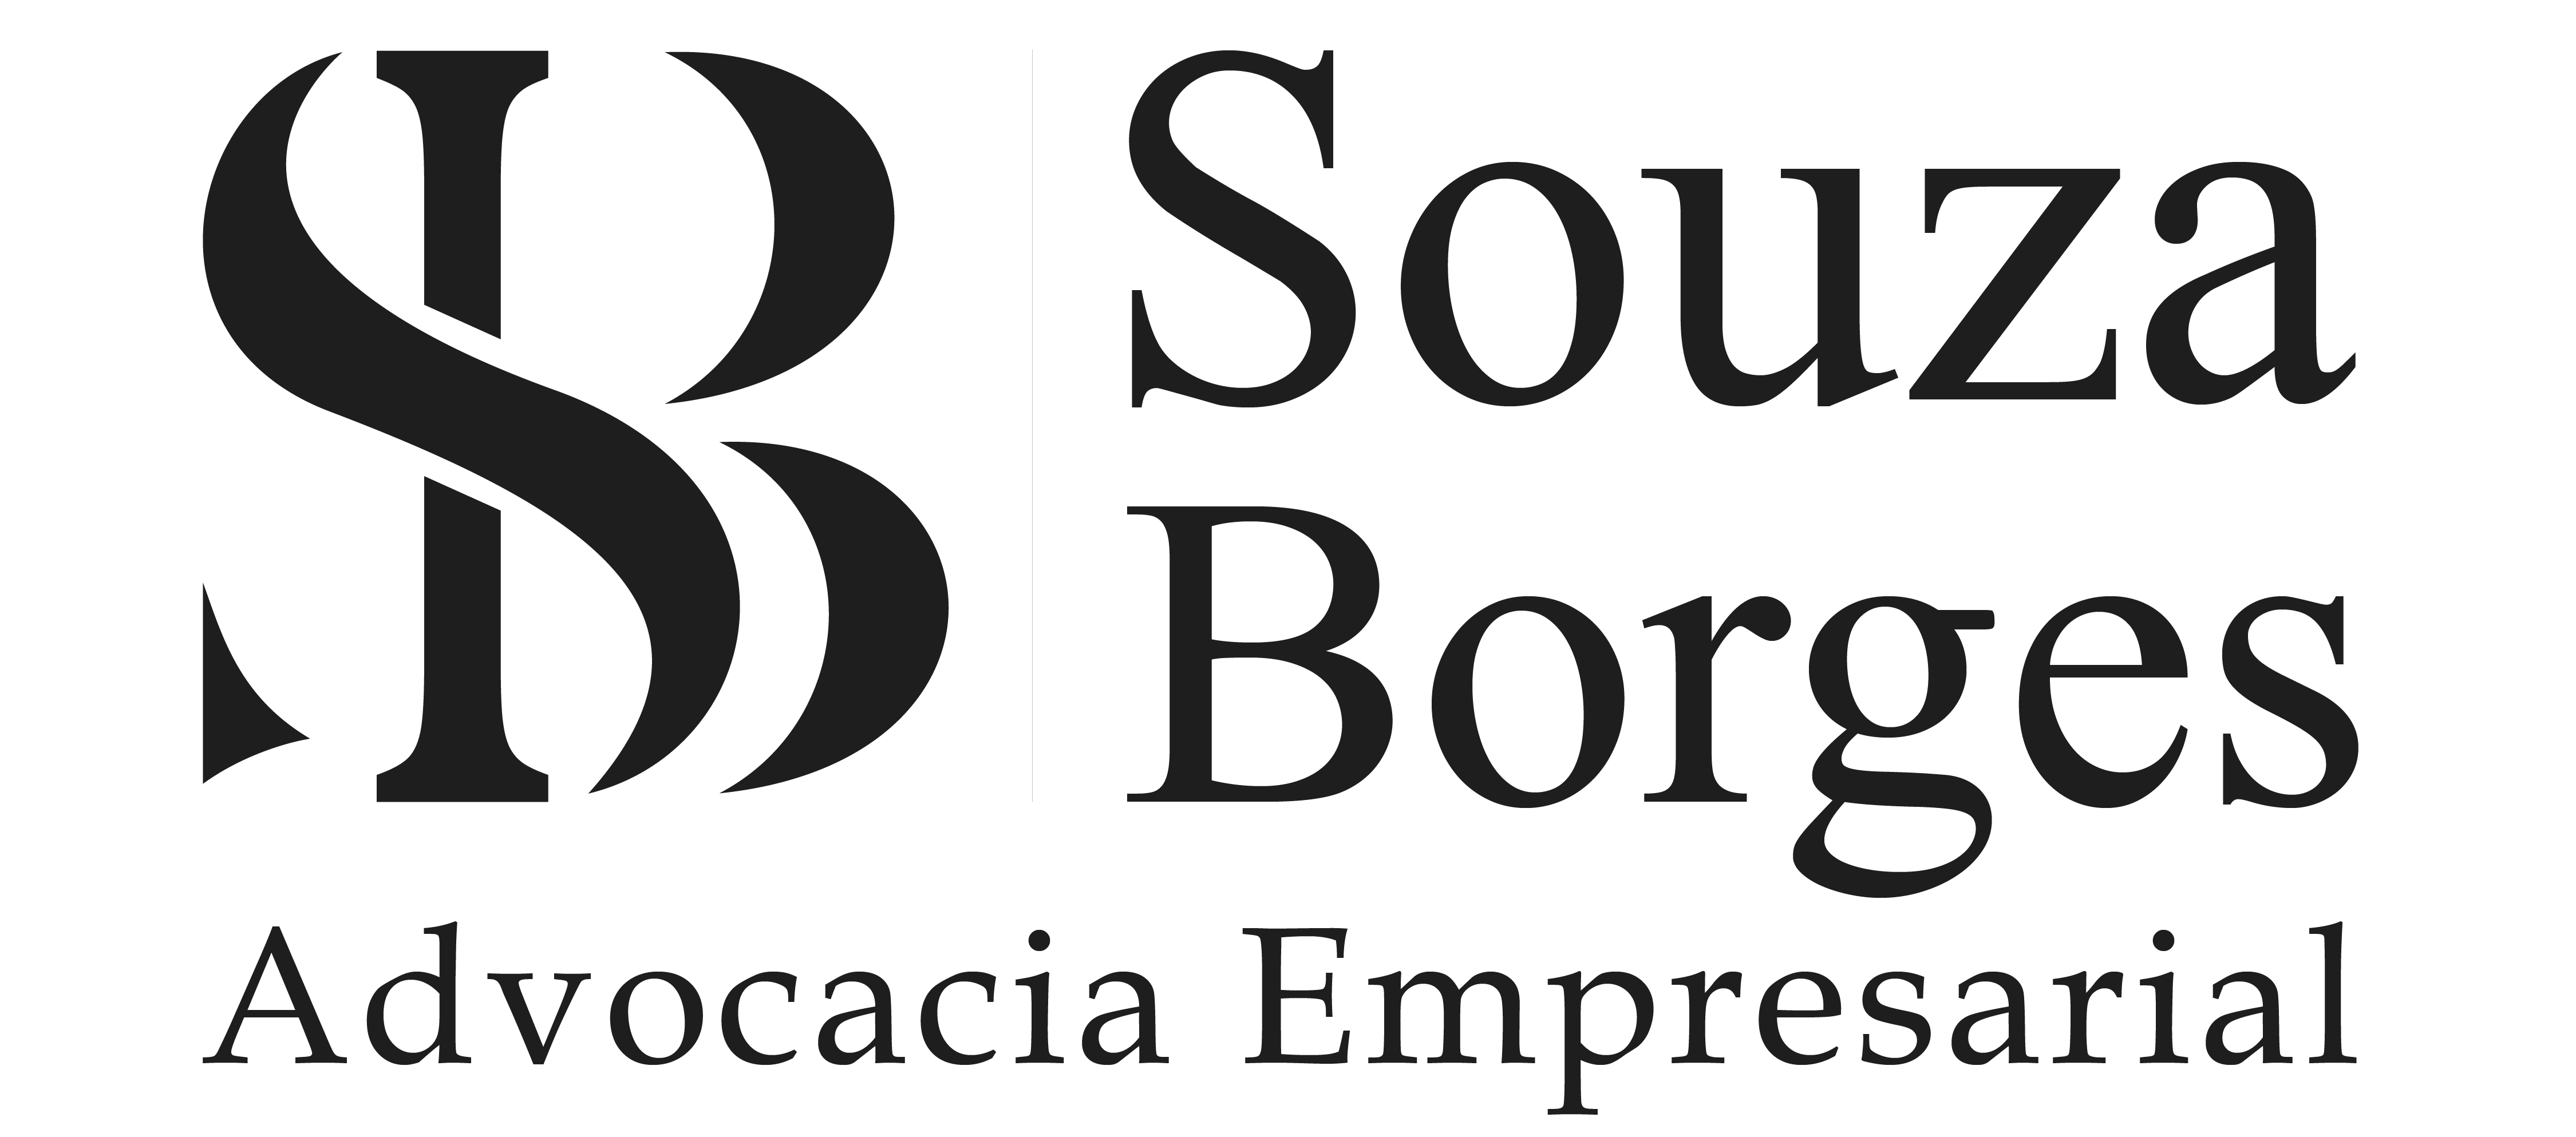 Souza Borges Advocacia Empresarial